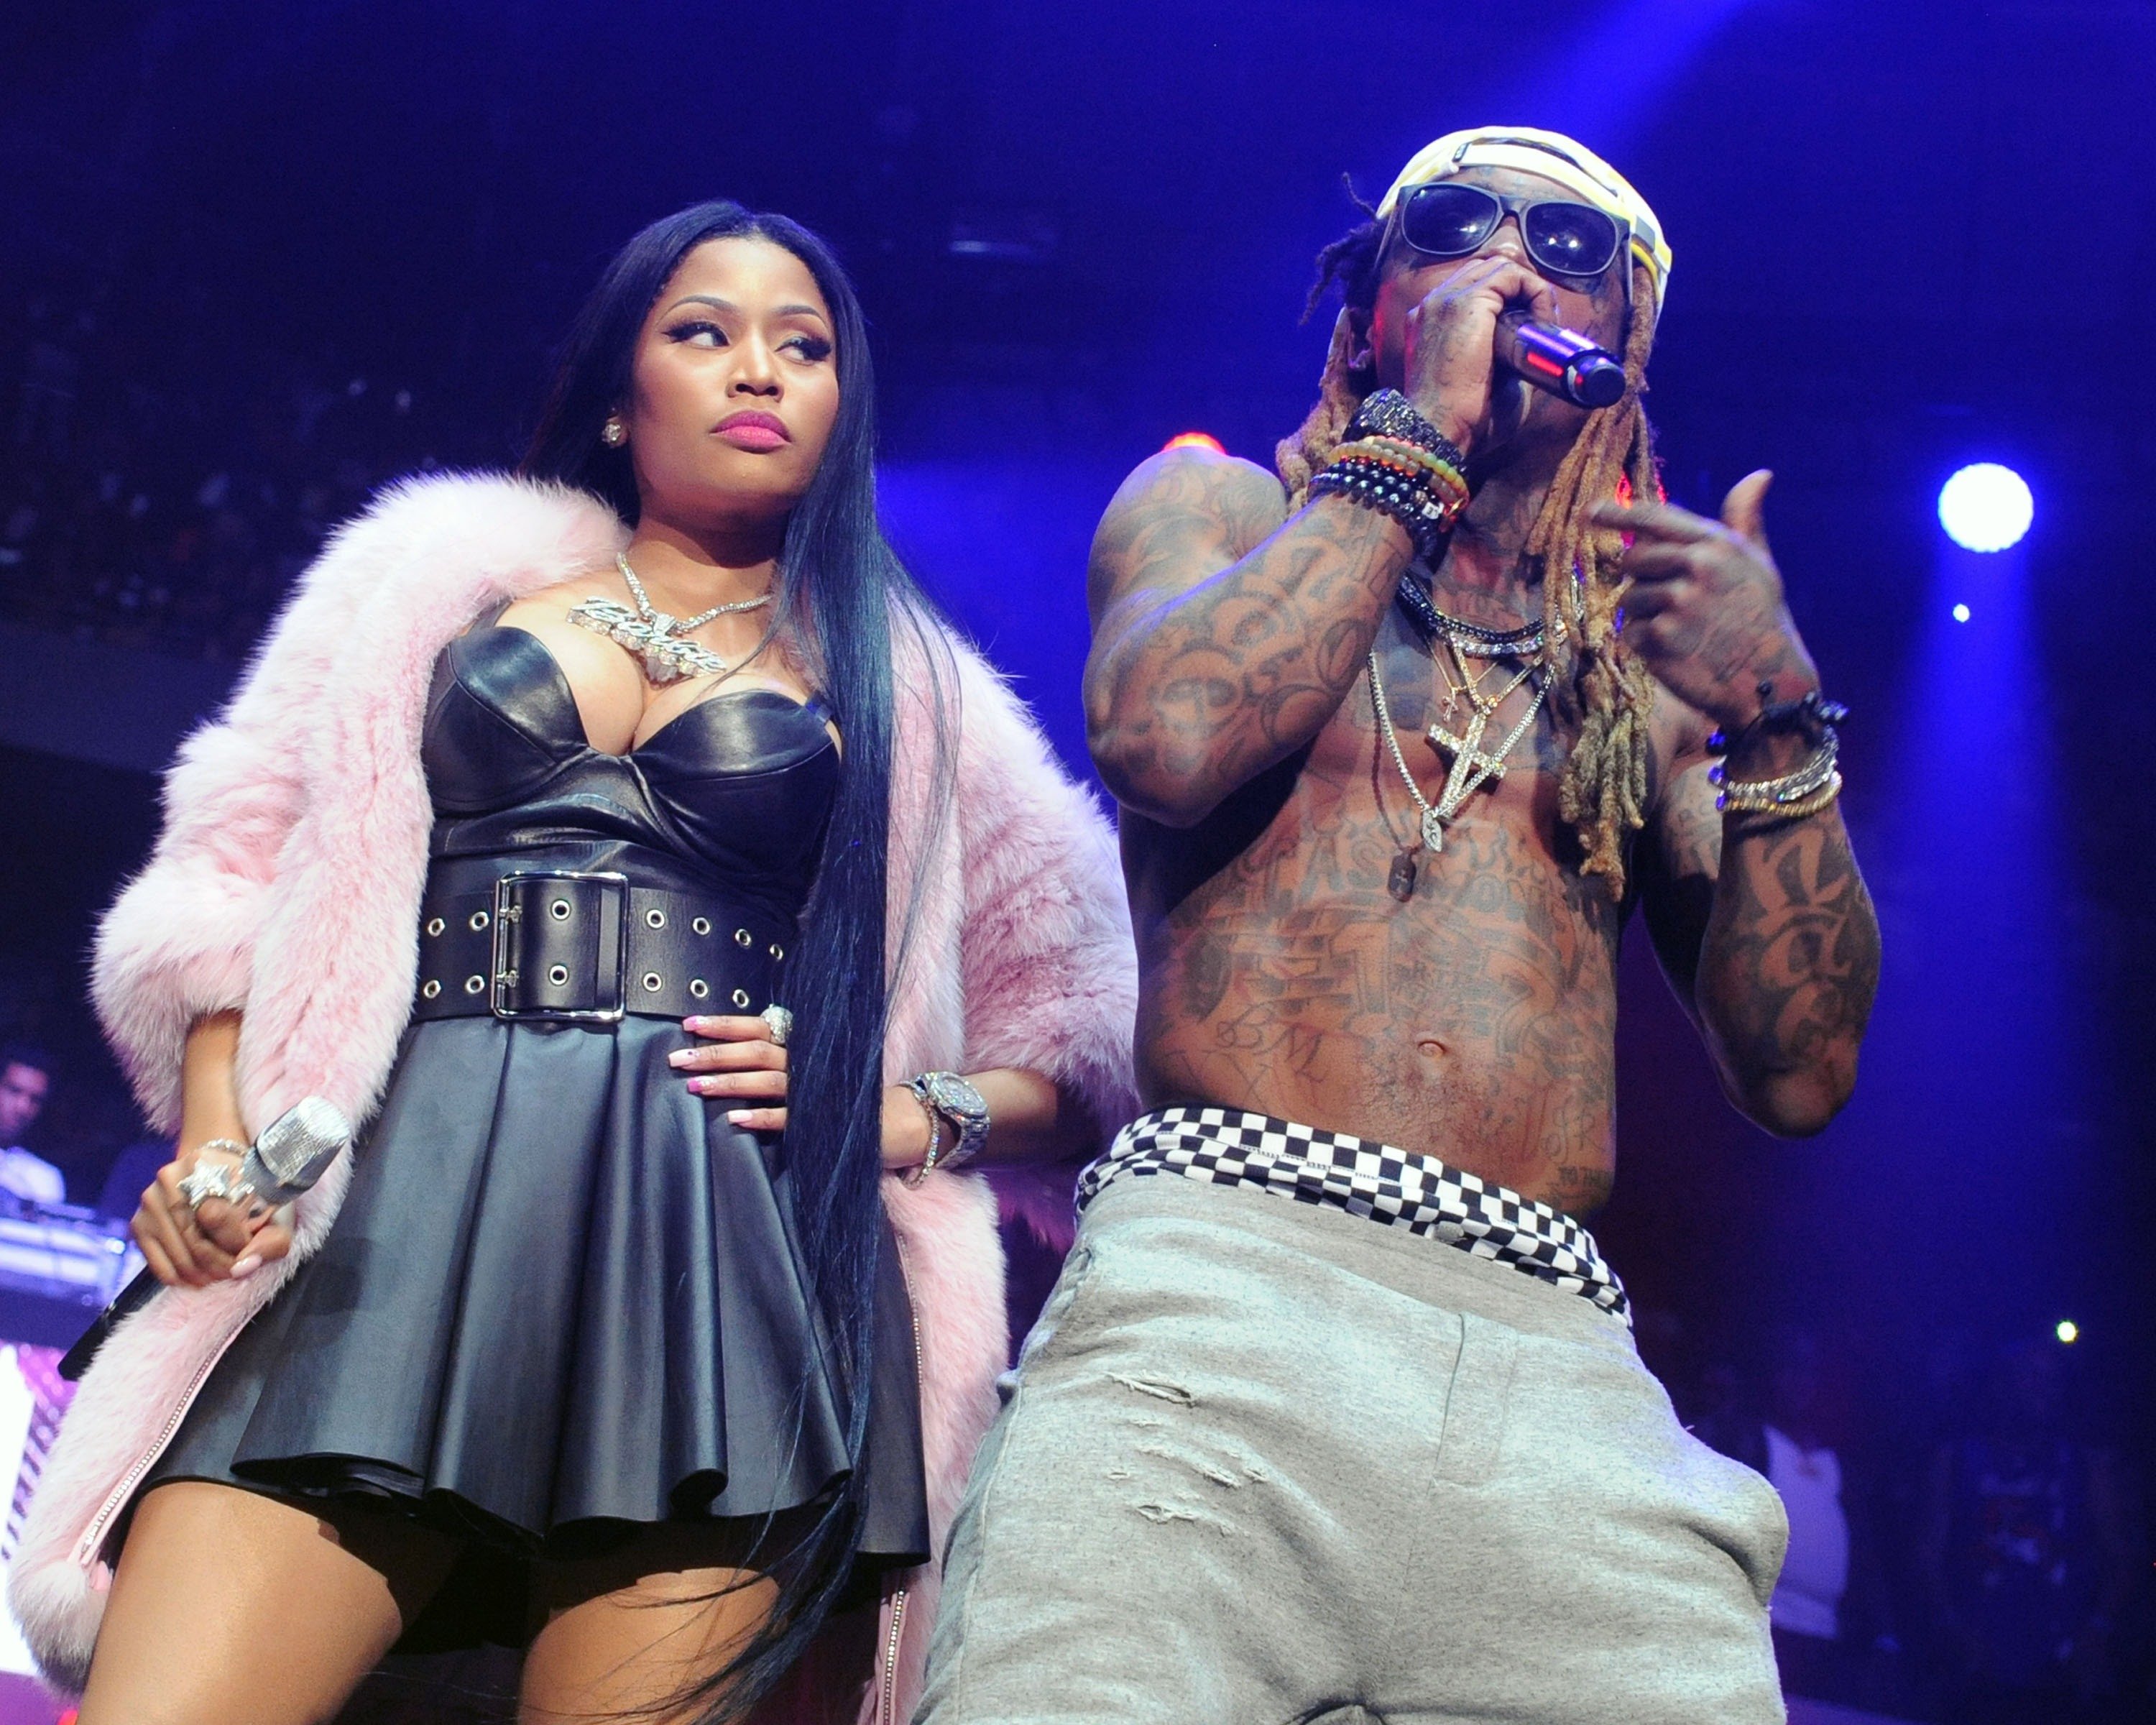 Nicki Minaj and Lil Wayne perform during surprise appearances duing the Hot 107.9 Birthday Bash